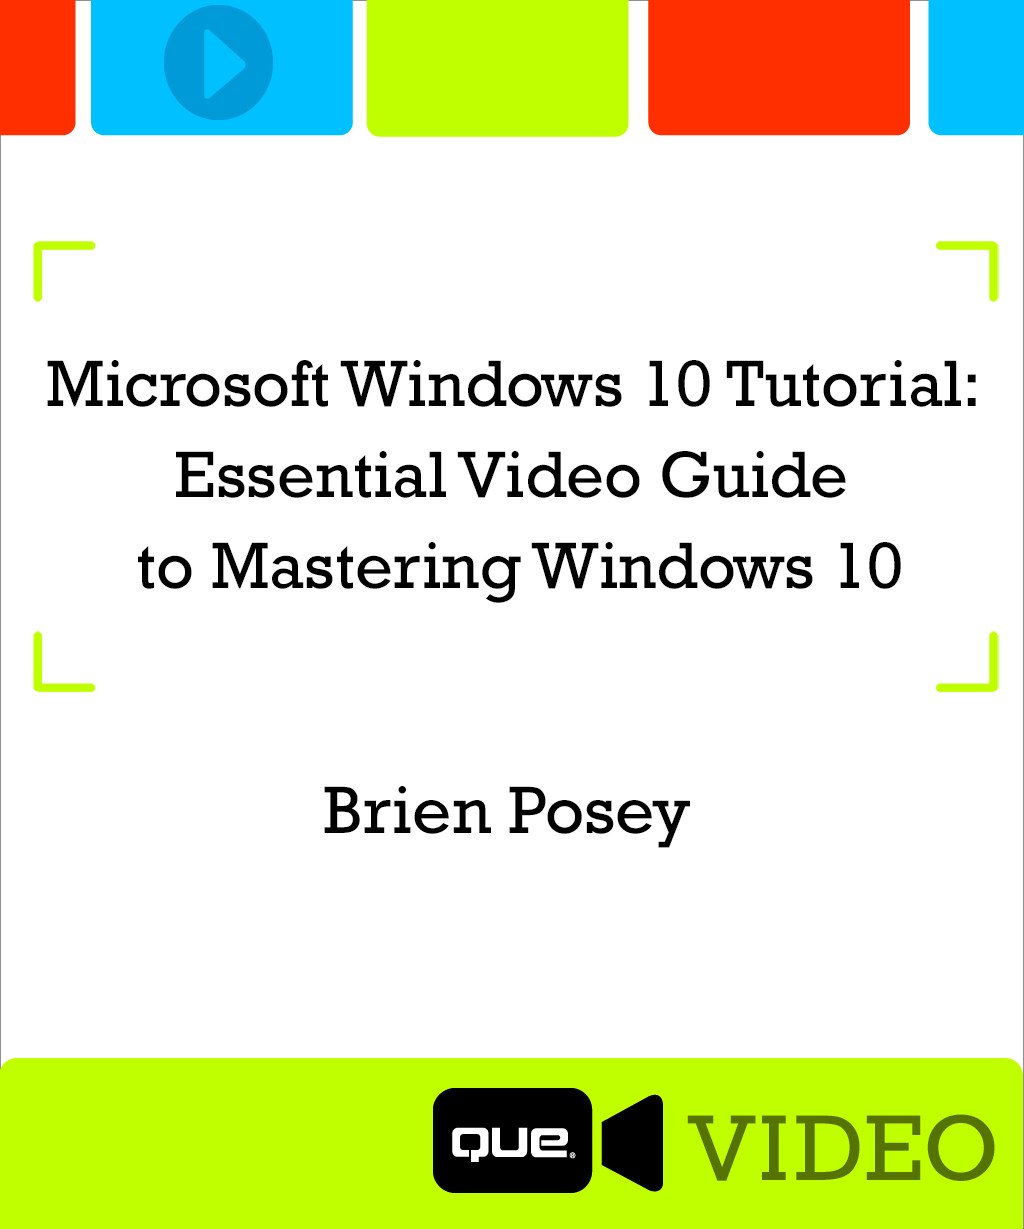 Part 4: Customizing Windows 10